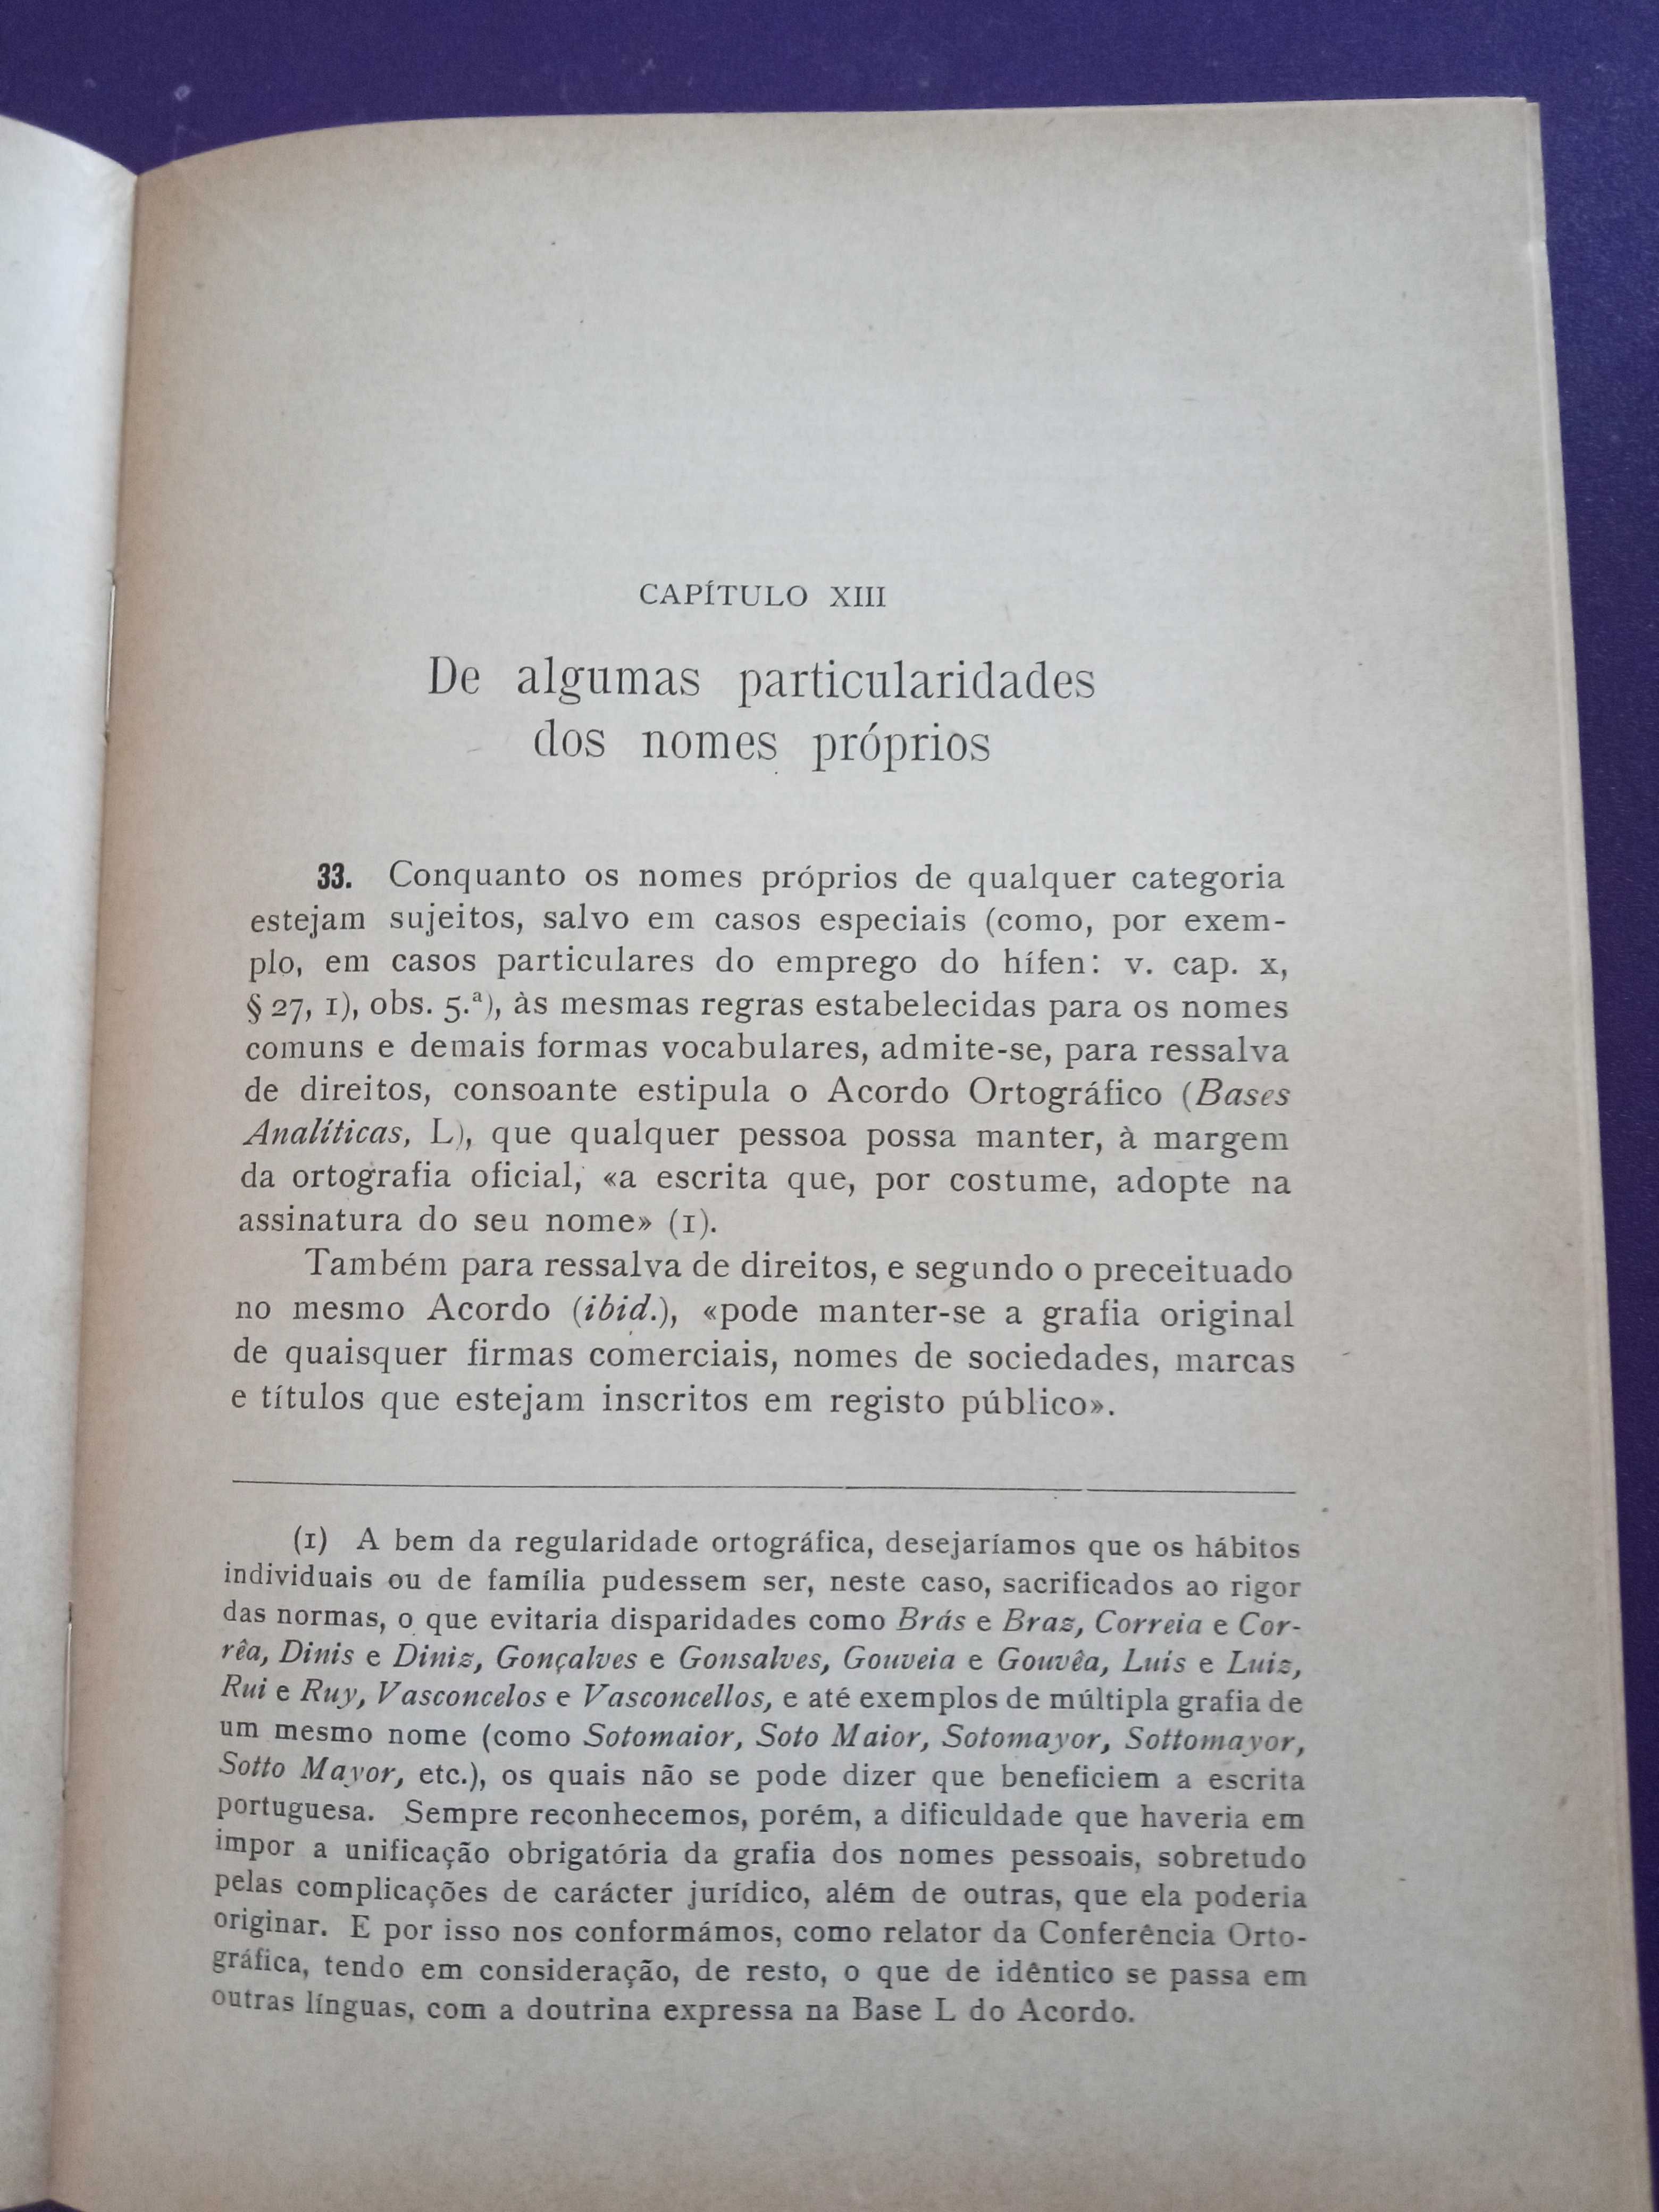 Tratado de Ortografia da Língua Portuguesa 1947 - Coimbra